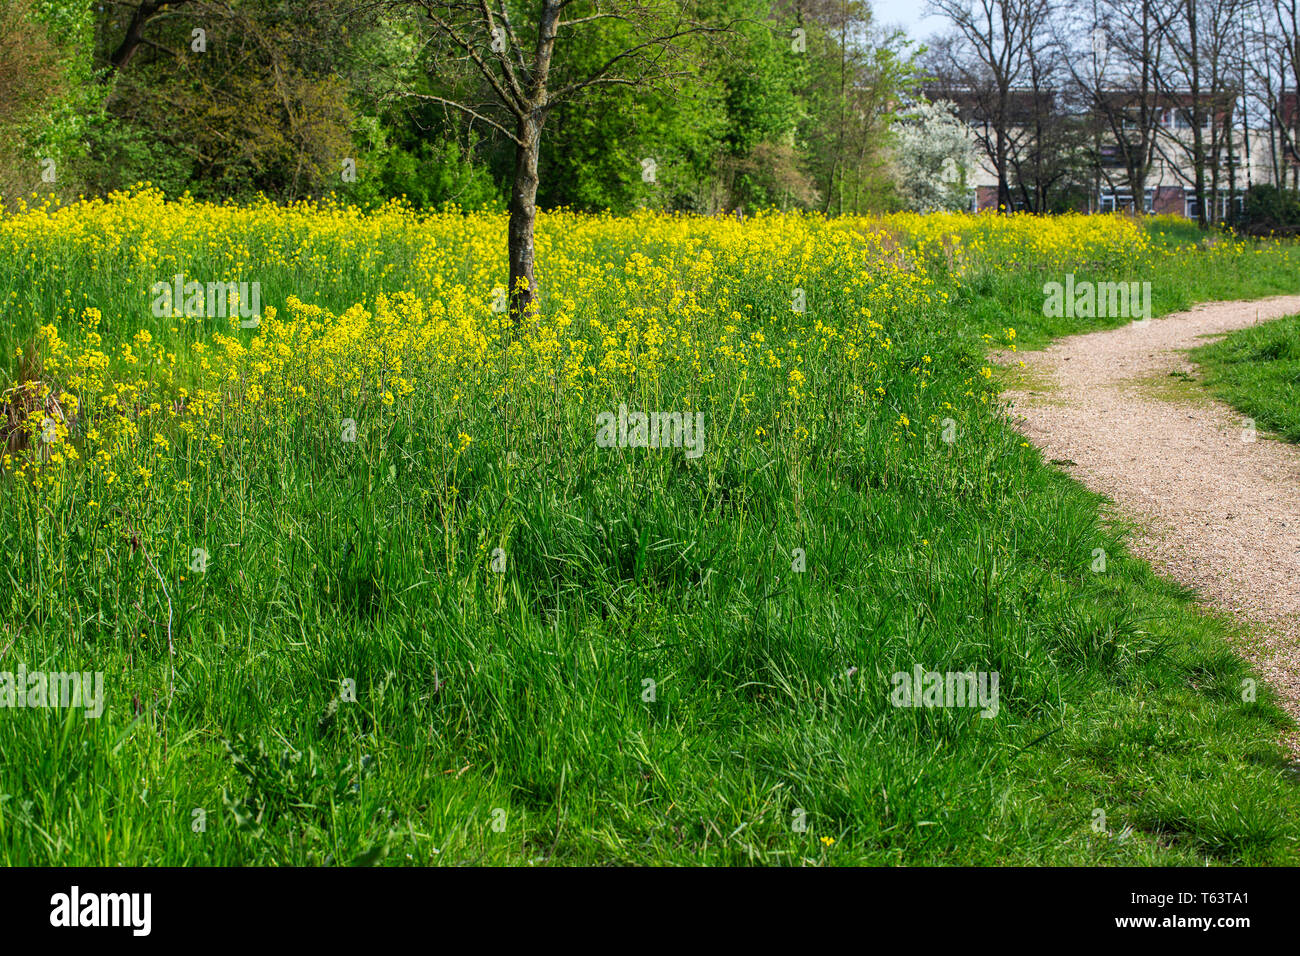 Footpath bordered by Flowering Field Mustard (Brassica rapa) Stock Photo